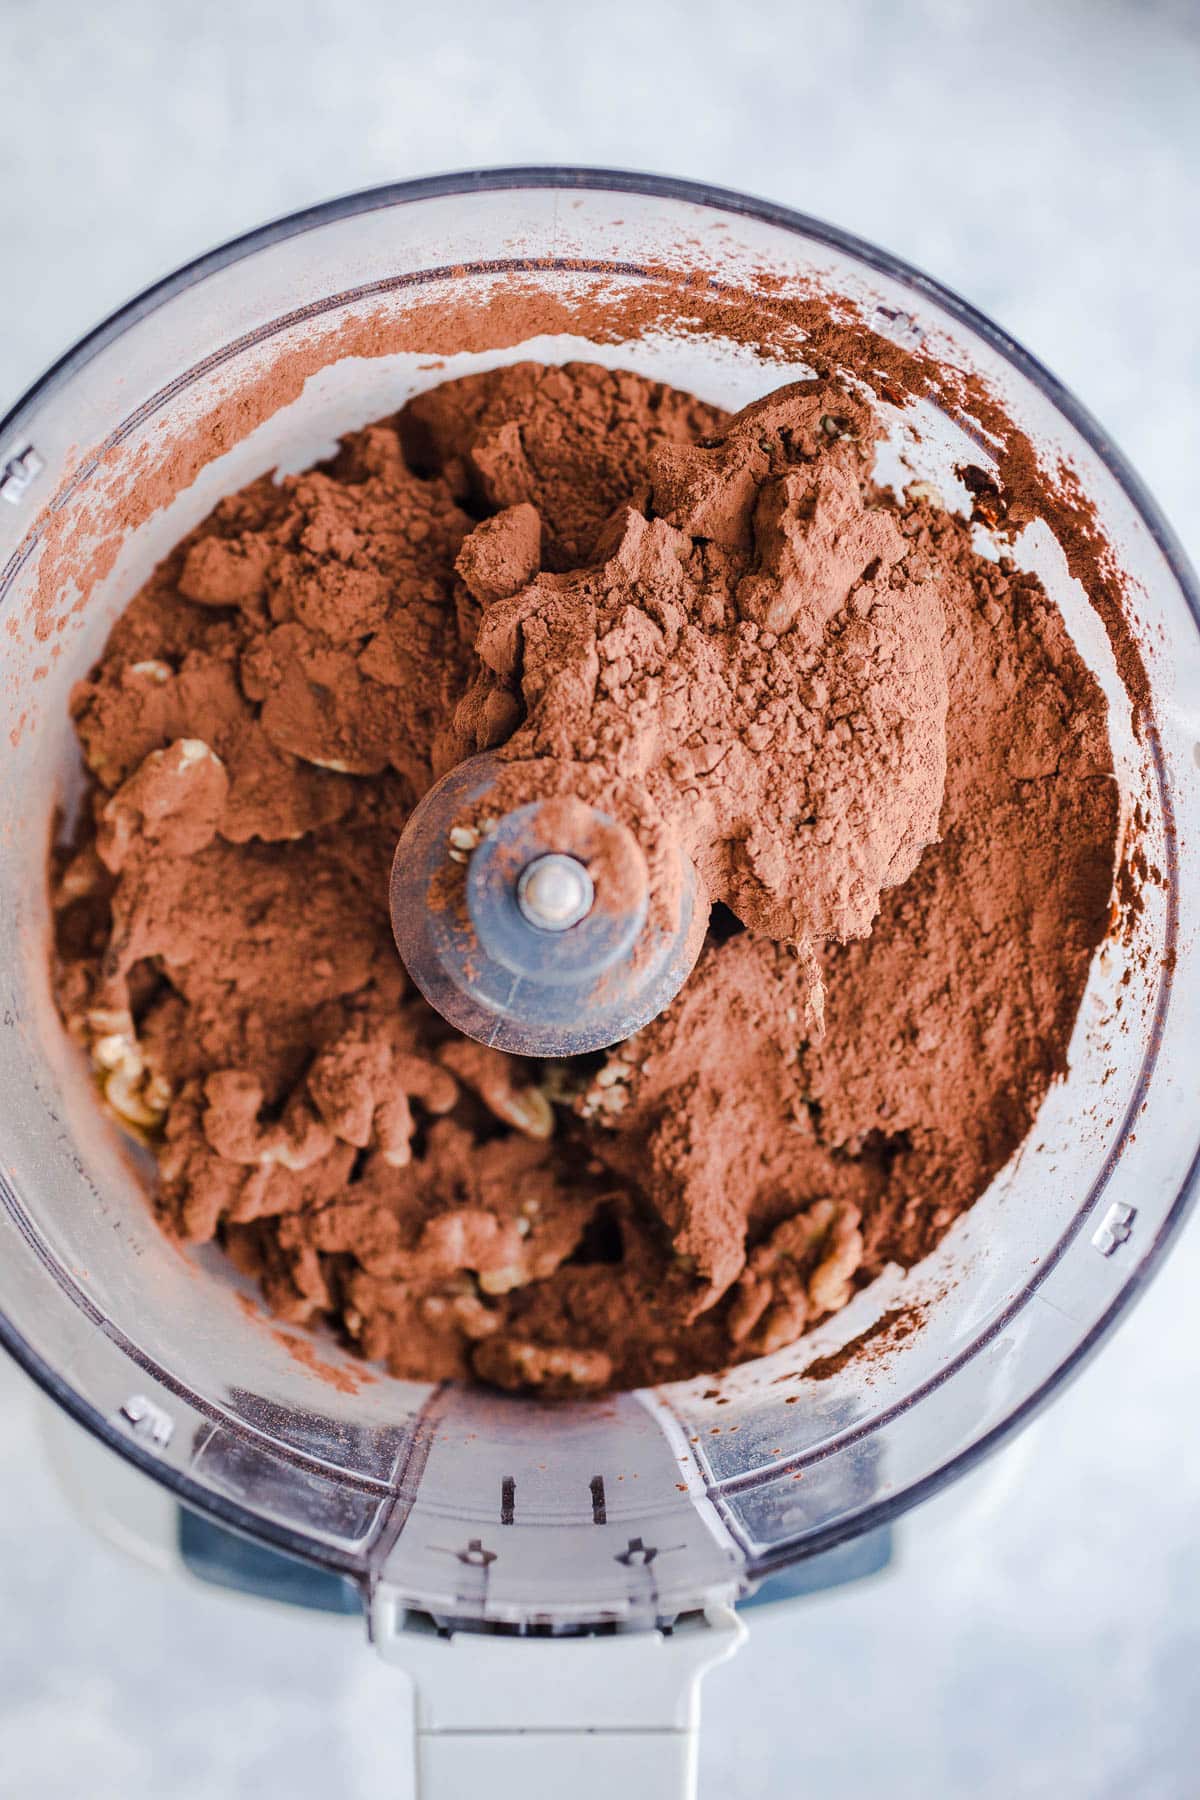 Cocoa powder and walnuts in a food processor.